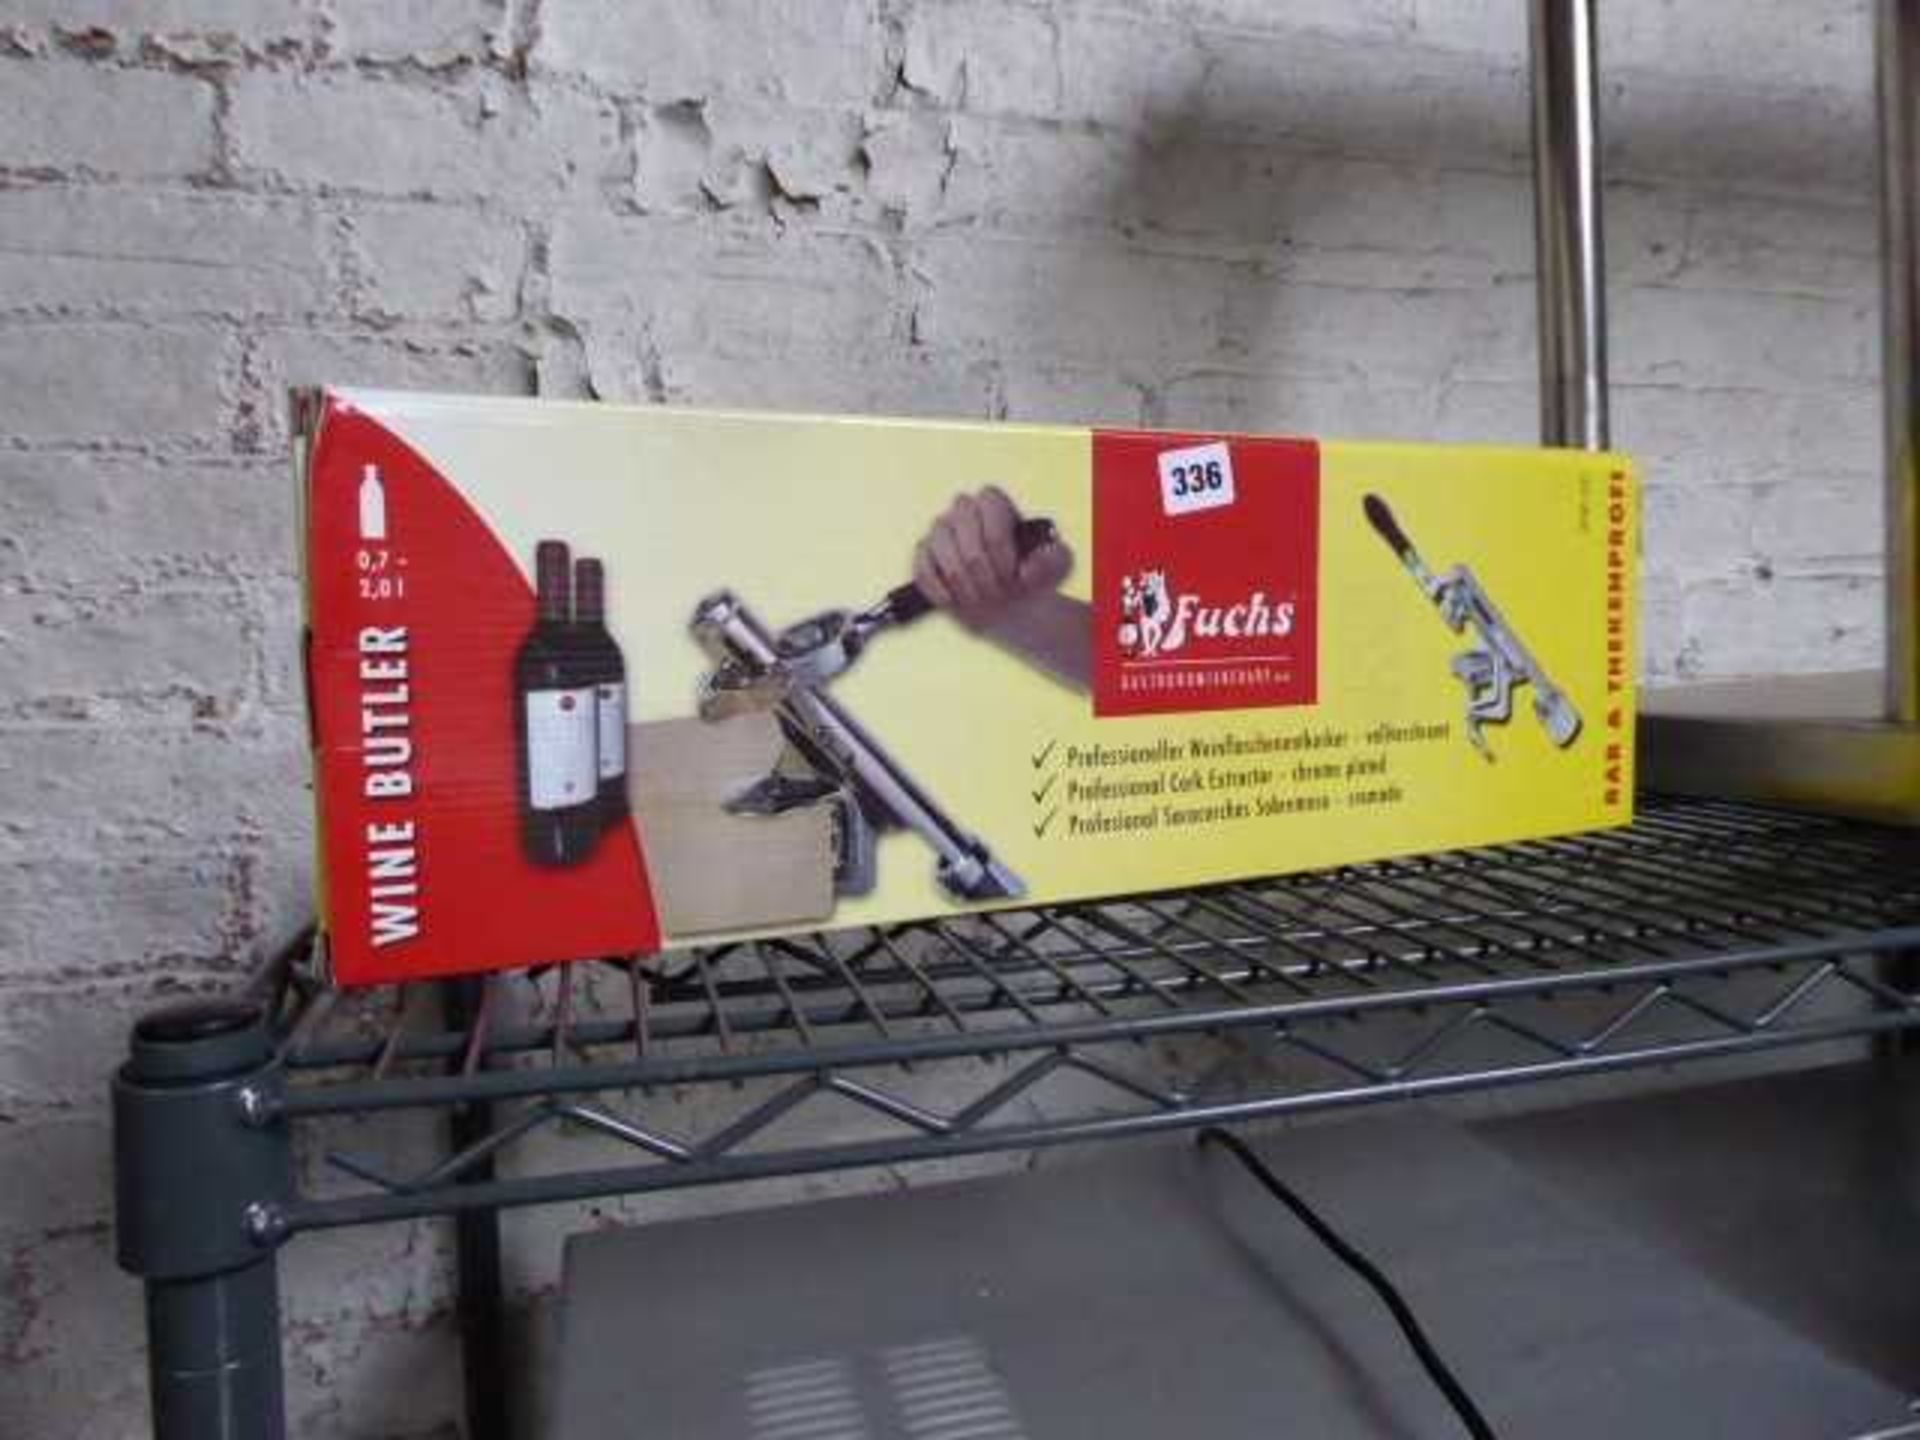 Fuchs bar mounted bottle opener